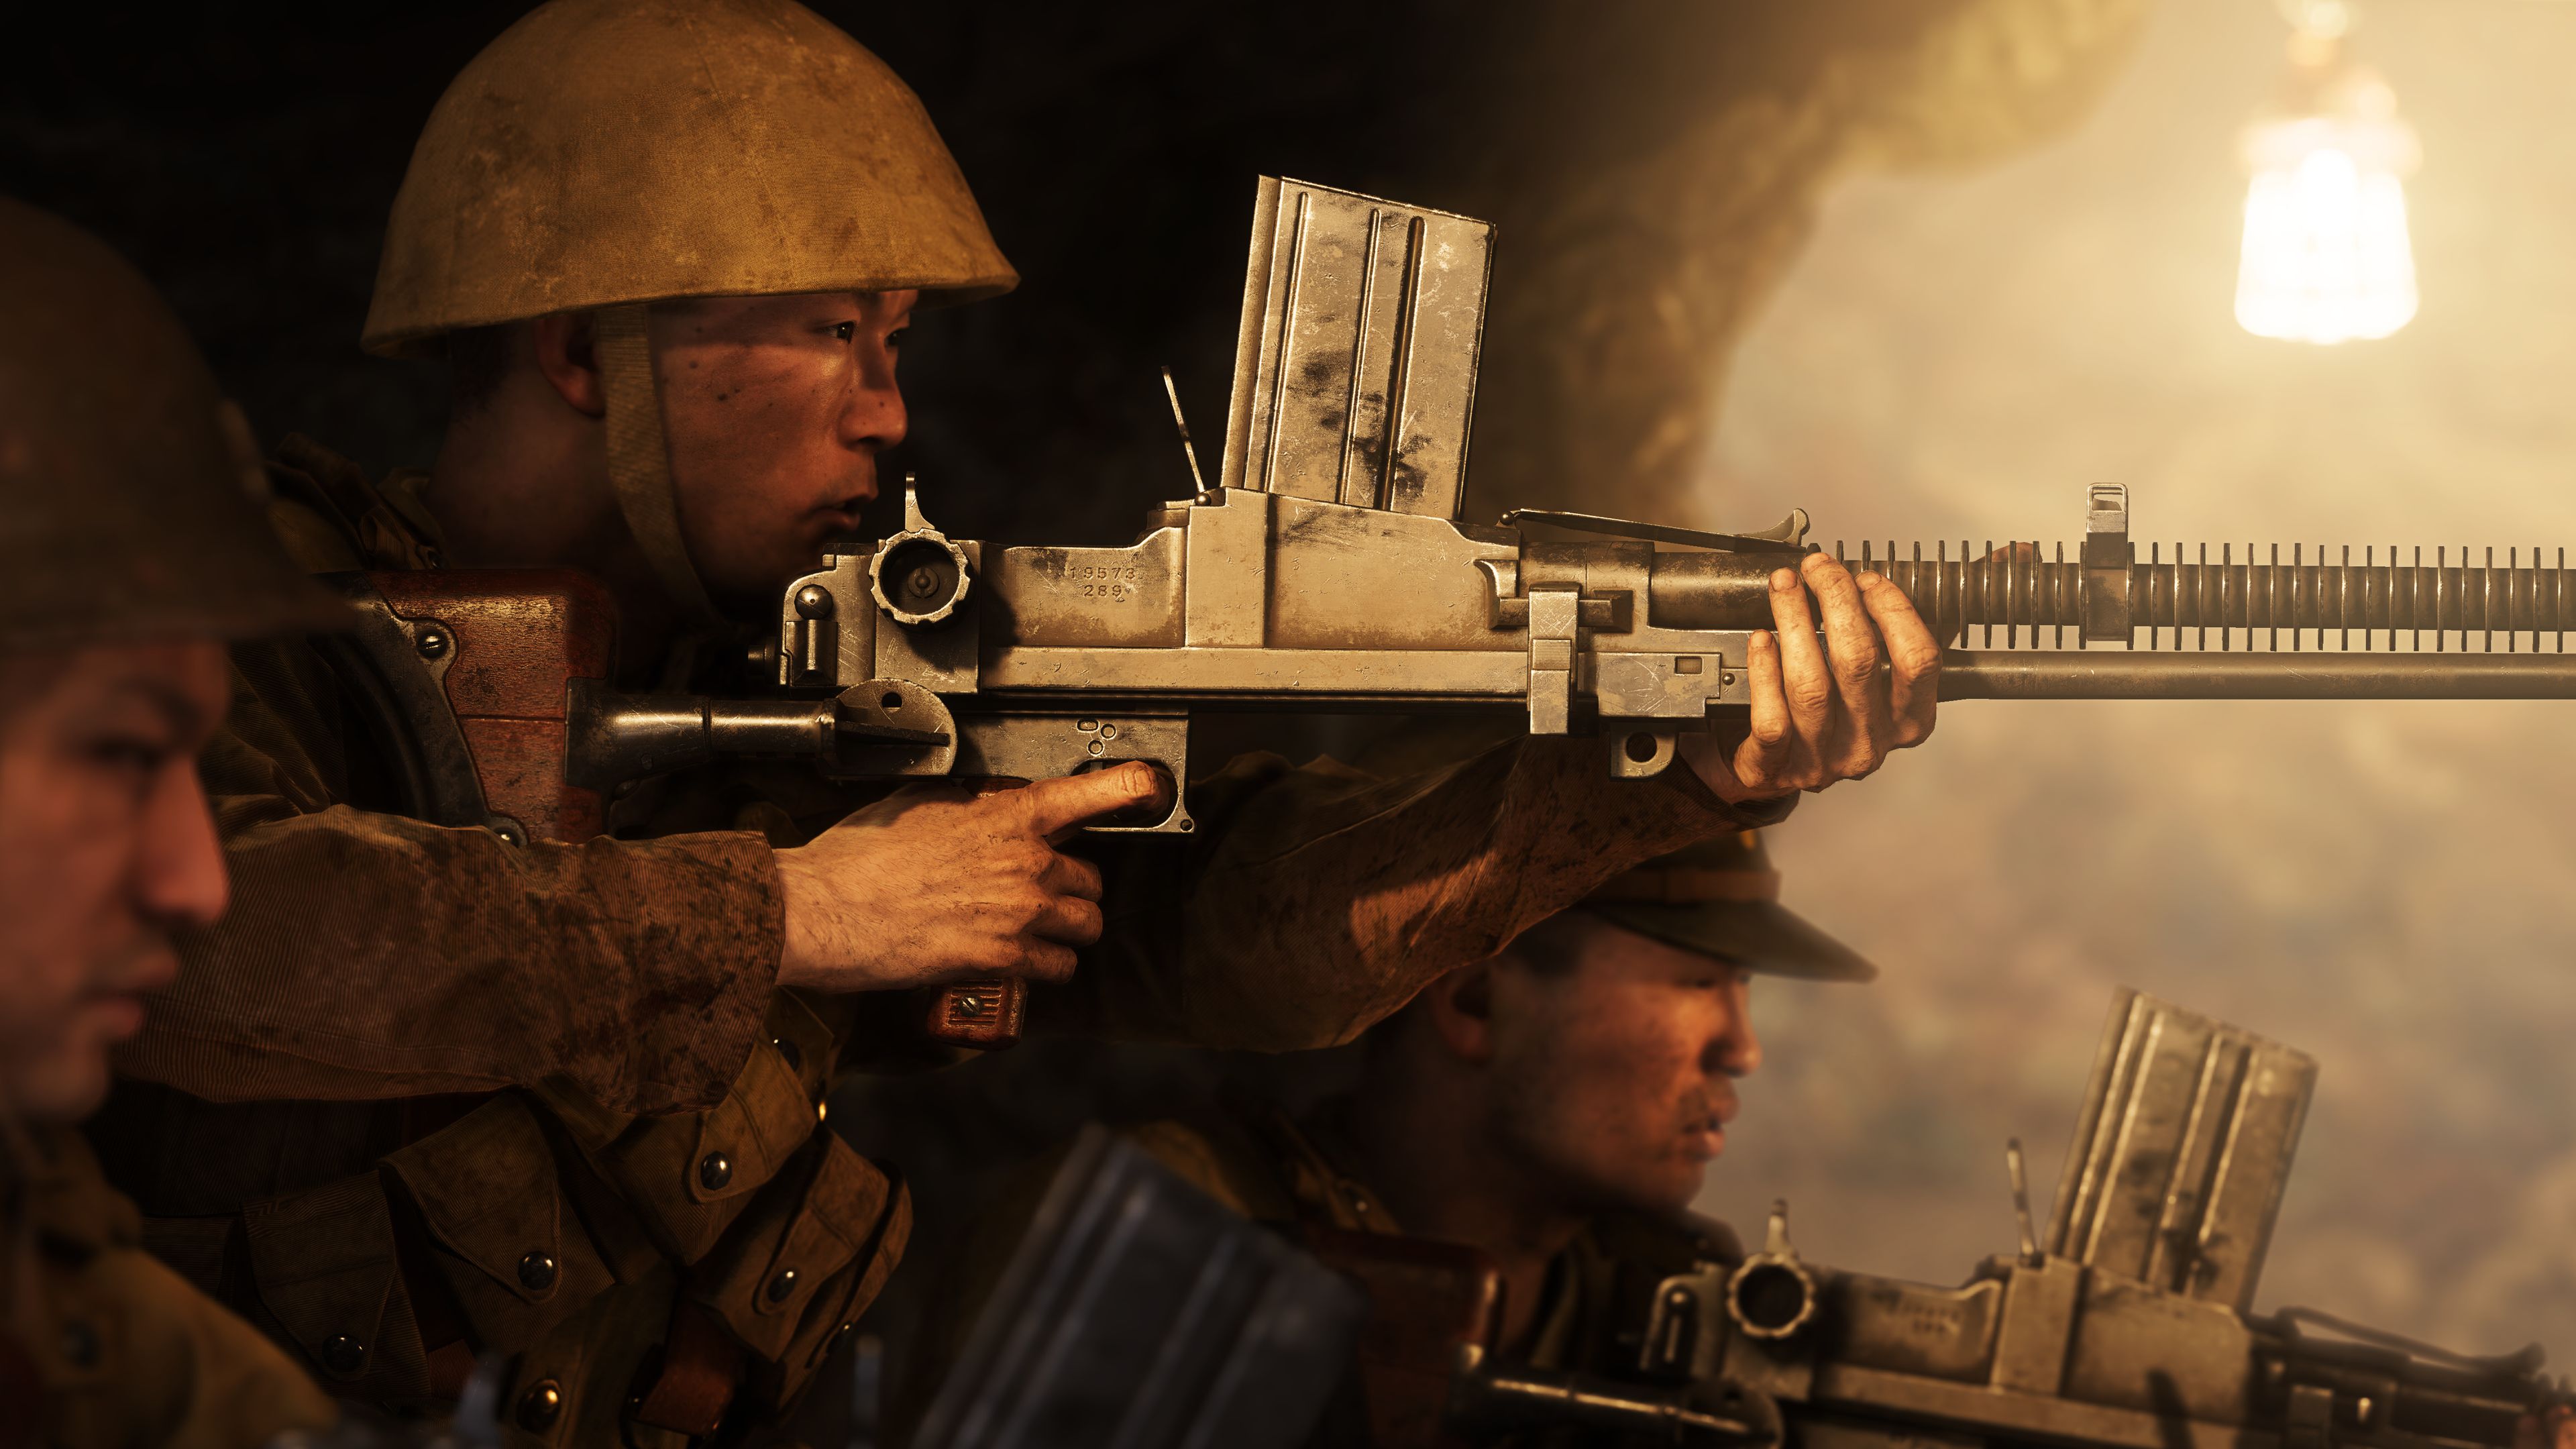 Descarga gratuita de fondo de pantalla para móvil de Campo De Batalla, Videojuego, Battlefield V.